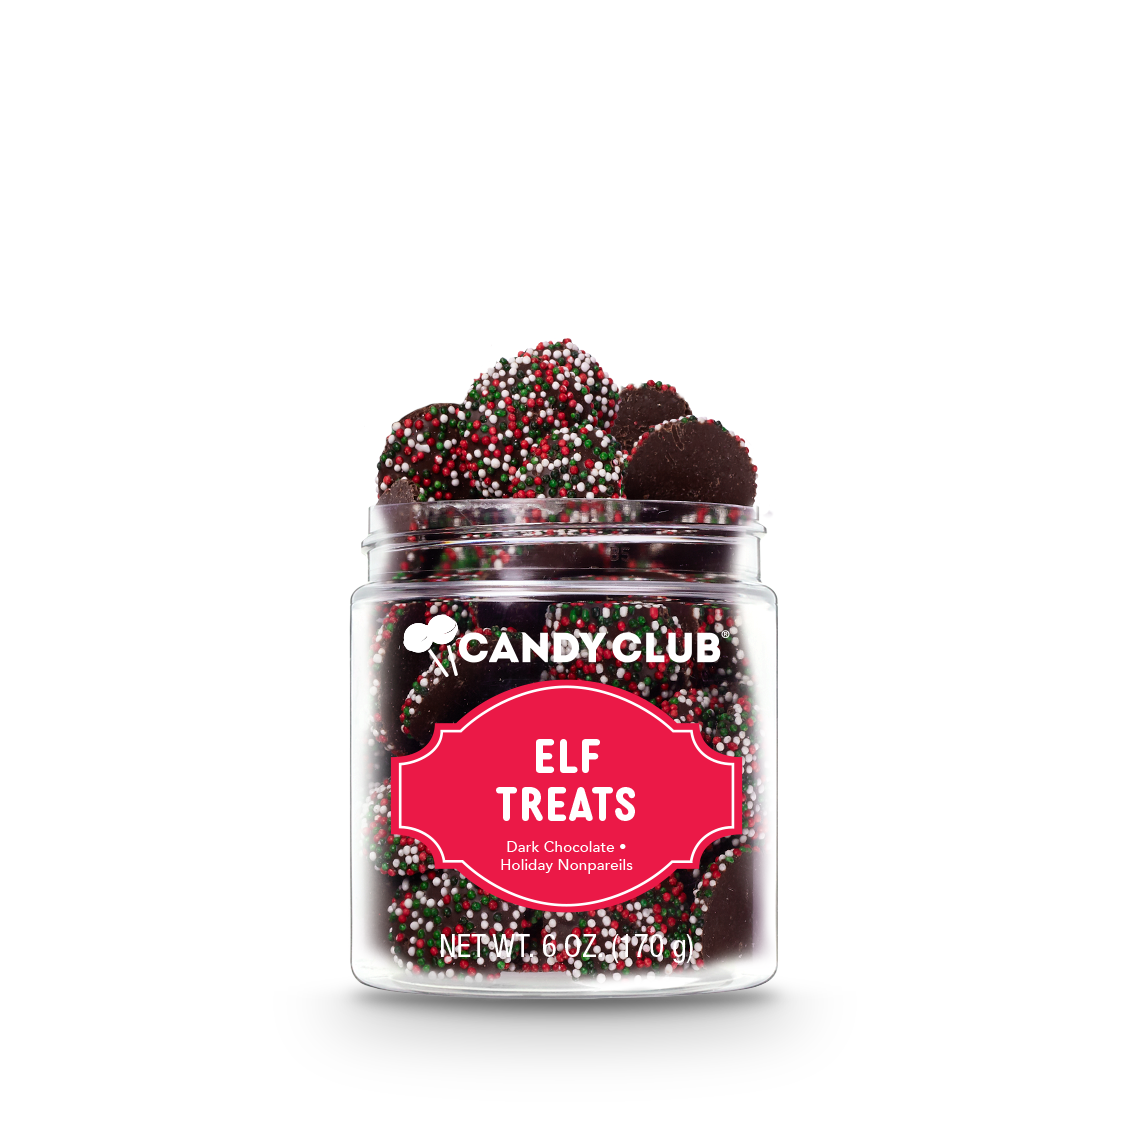 Elf Treats Dark Chocolate Nonpareils Home & Lifestyle Candy Club